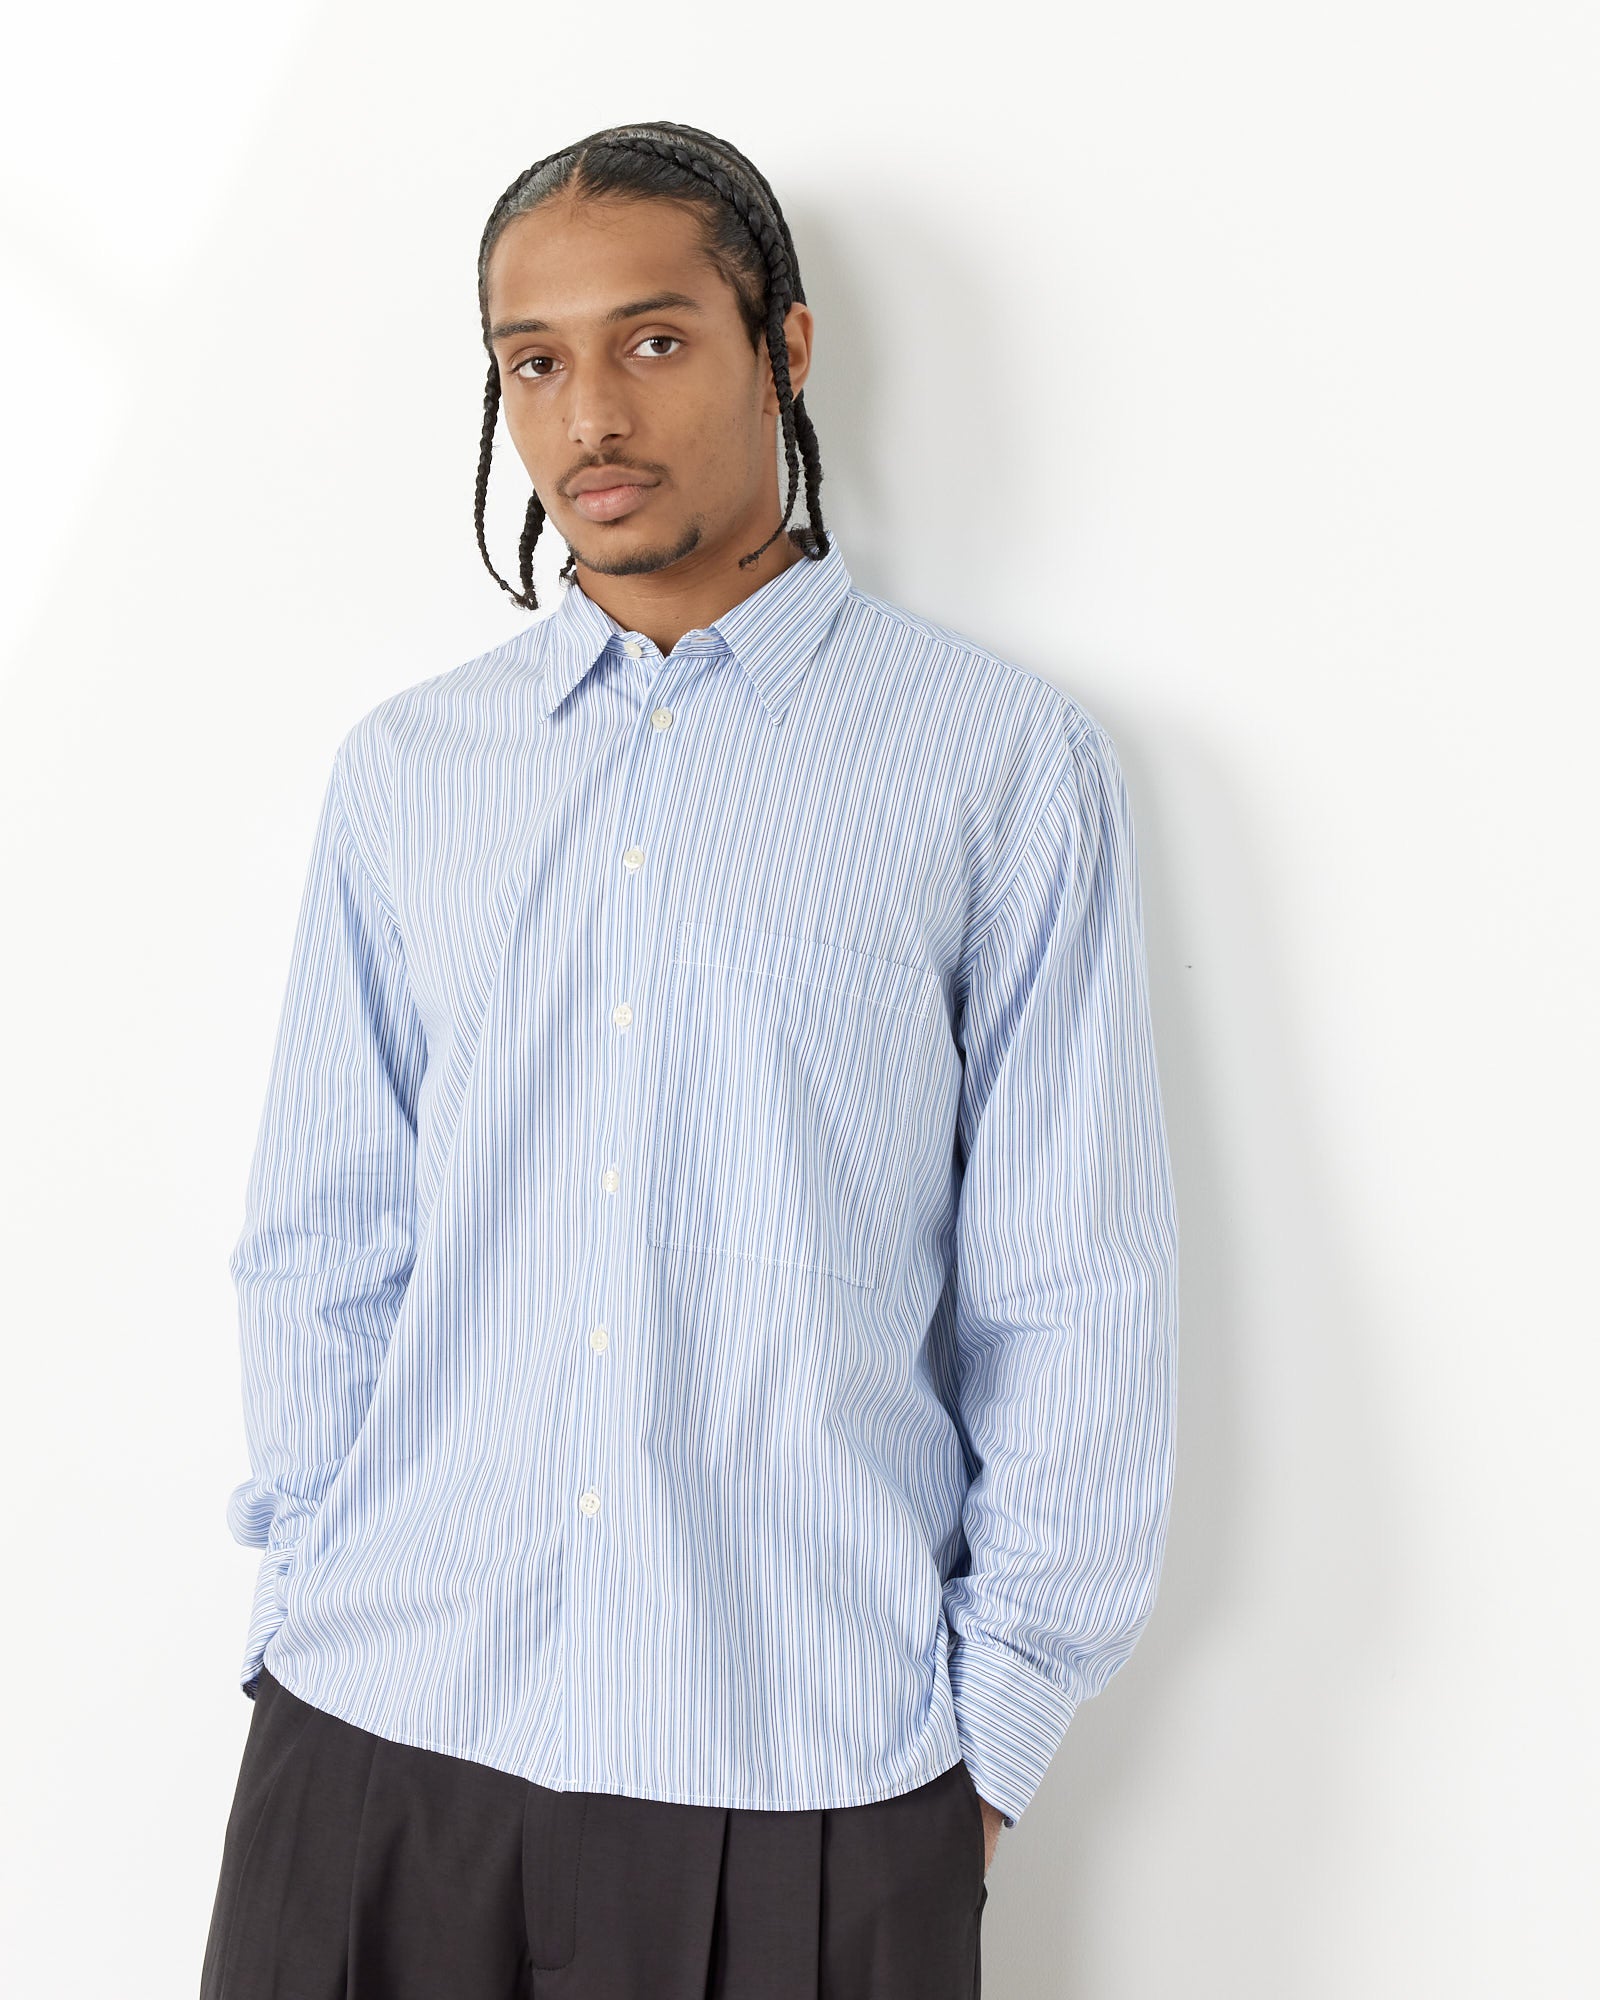 Square Pocket Stripe Shirt in Blue/Navy